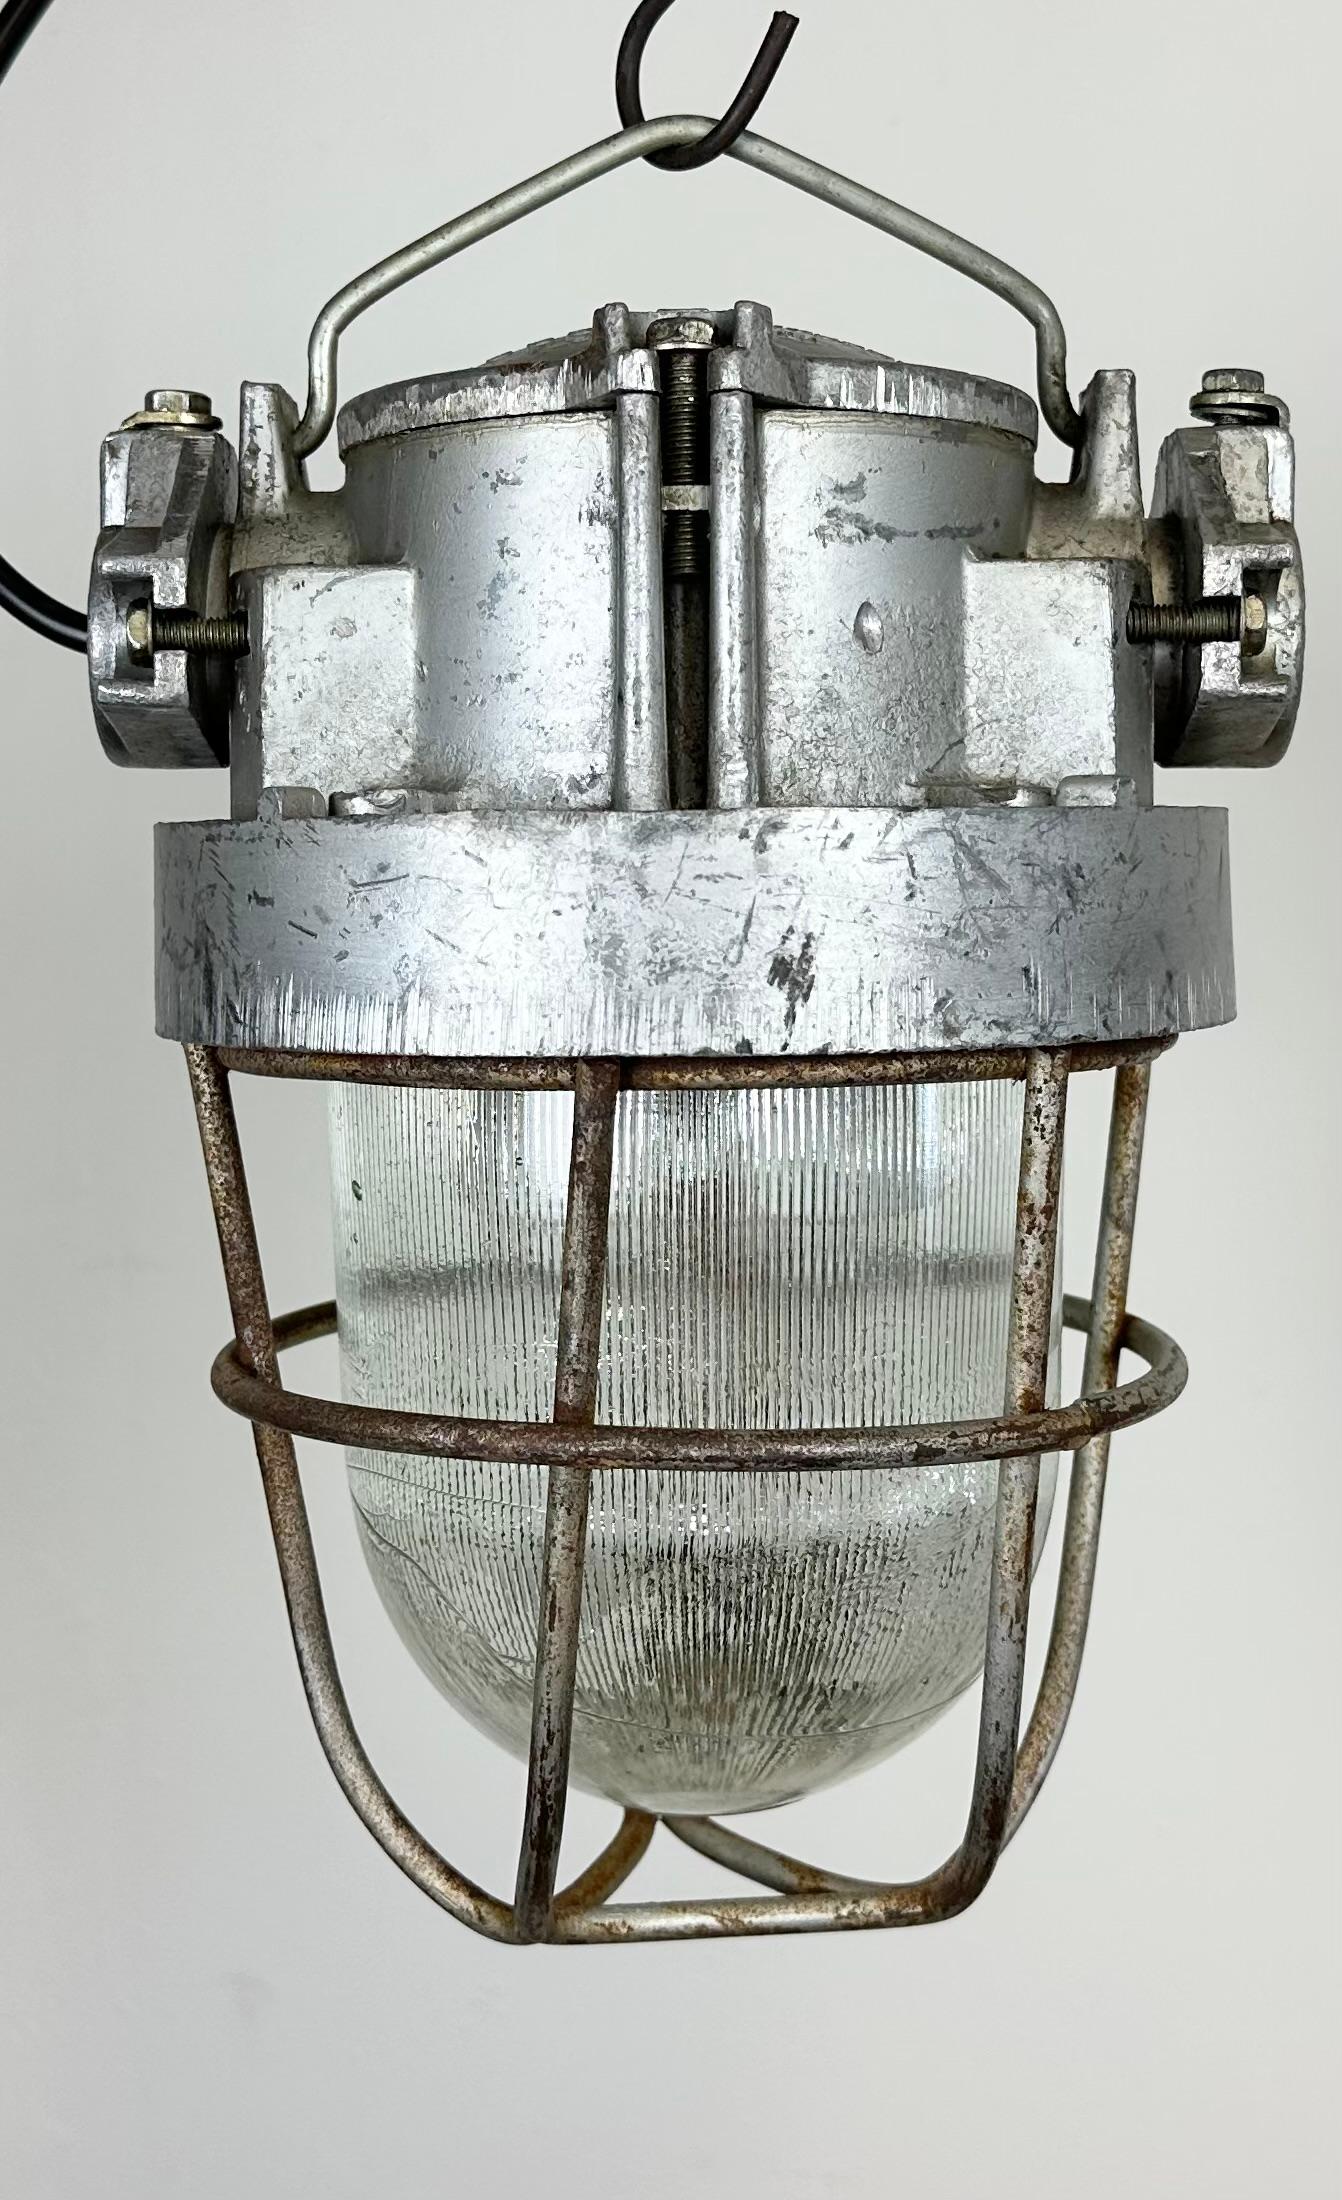 Russian Industrial Soviet Cast Aluminium Bunker Pendant Light with Iron Grid, 1960s For Sale